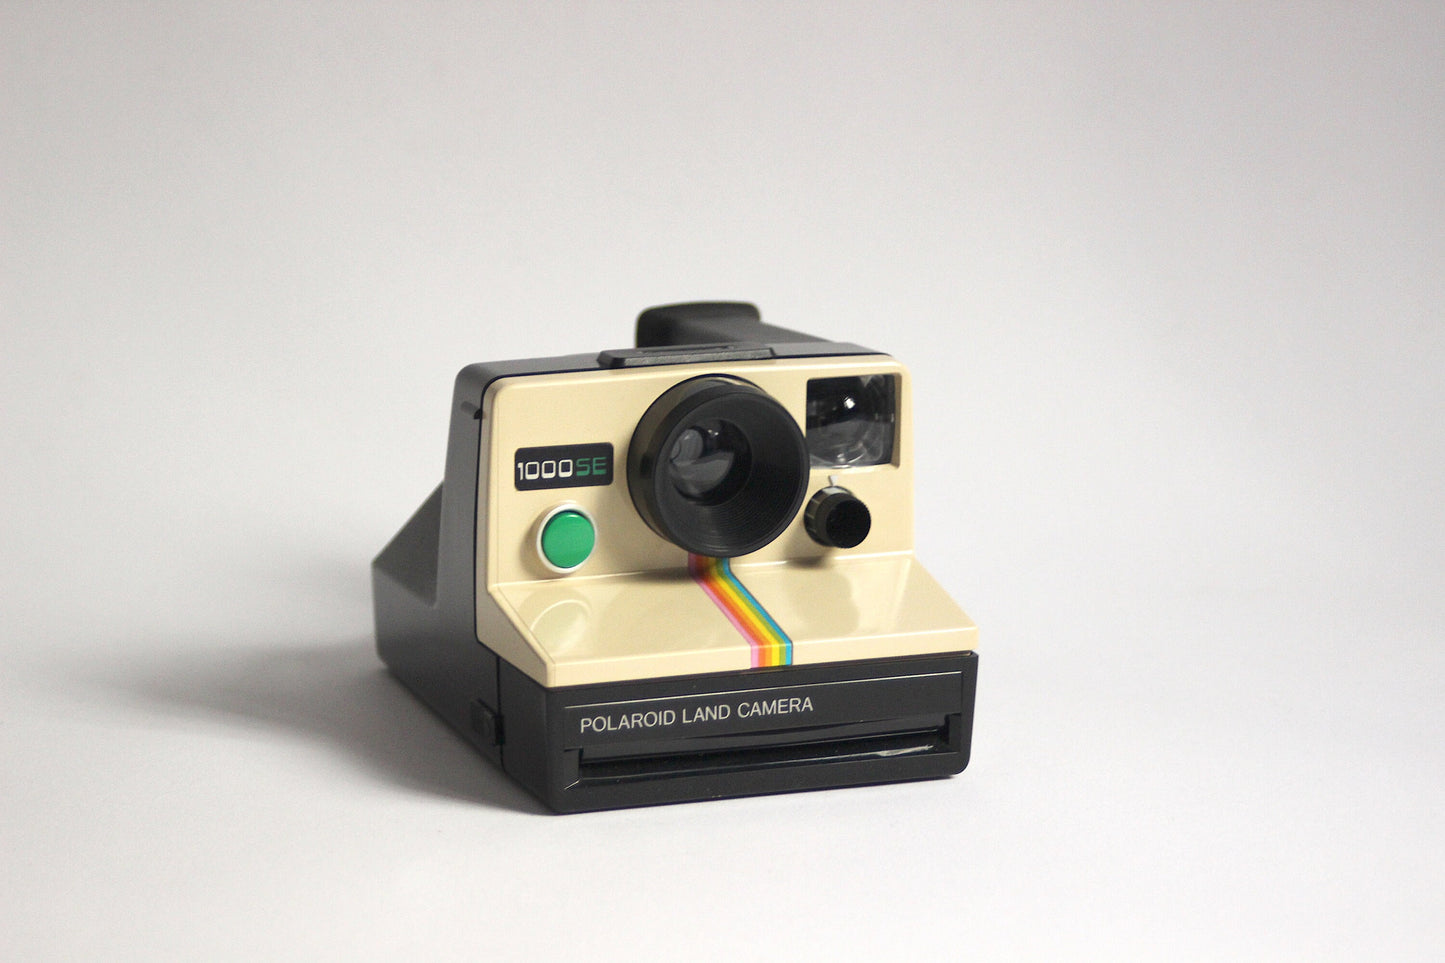 Polaroid 1000SE Land Camera special edition 1976 - green button - Includes original box and original instructions book